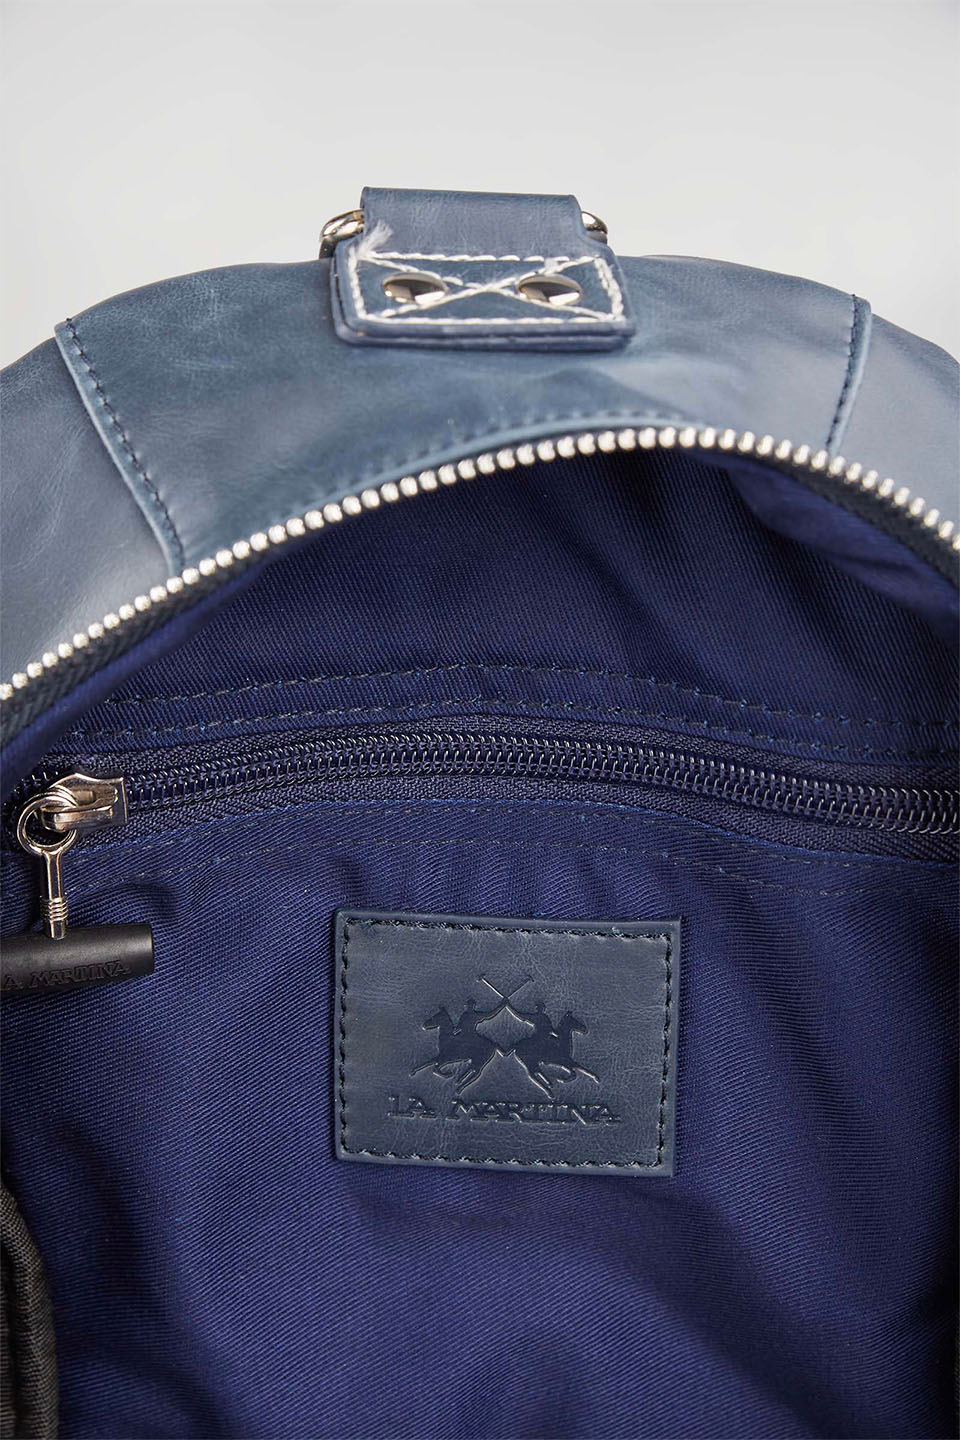 PU leather crossbody bag - La Martina - Official Online Shop